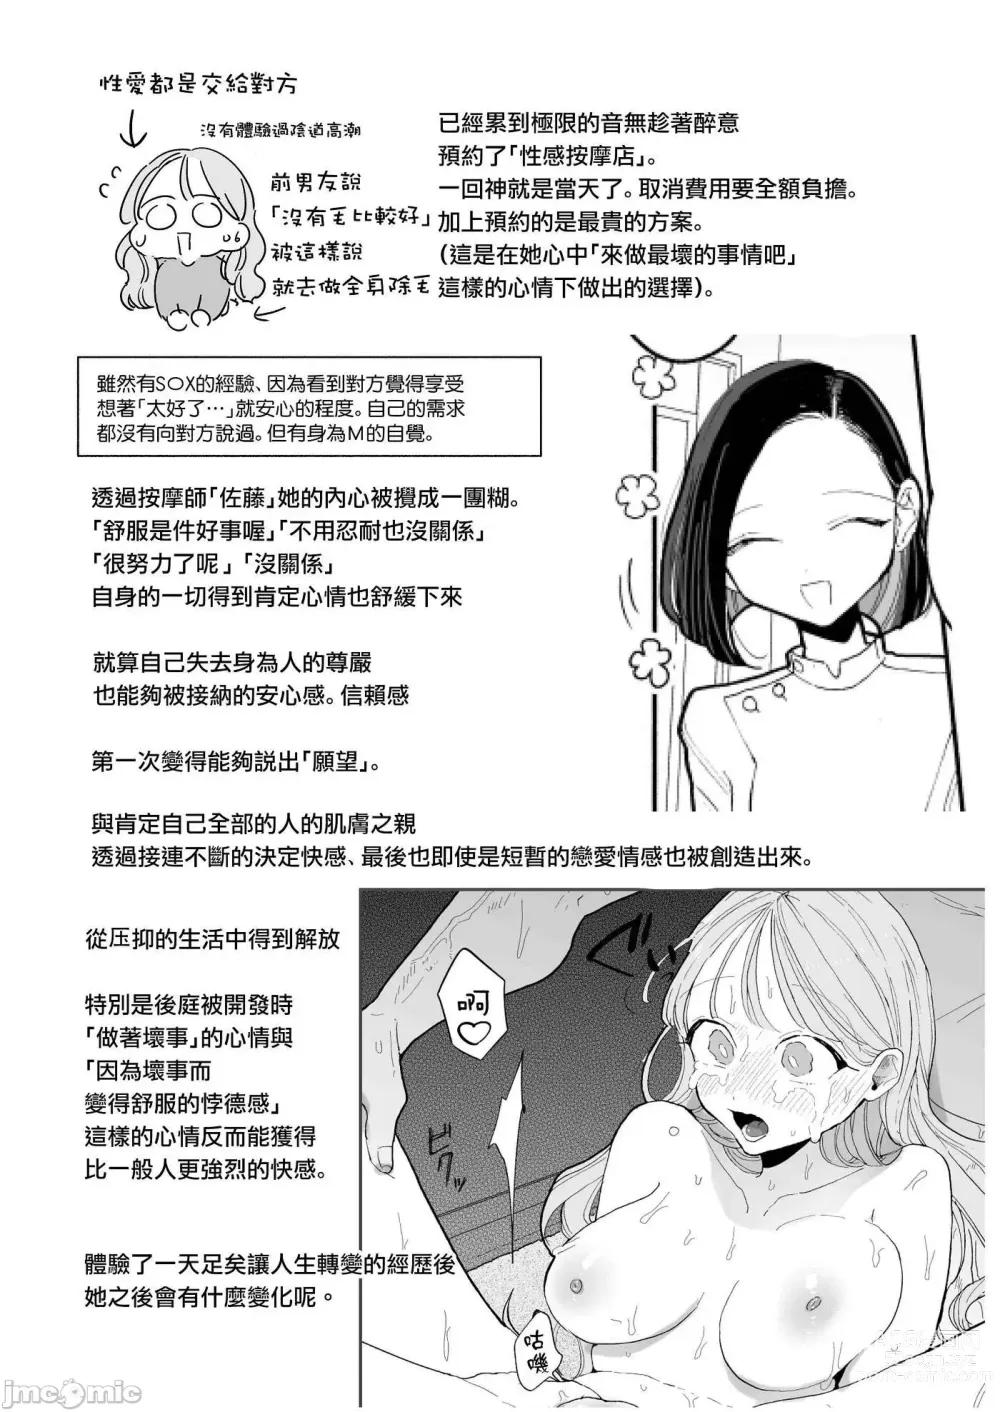 Page 113 of manga 絶頂リフレ 駅前の性感マッサージ店で○○になっちゃ